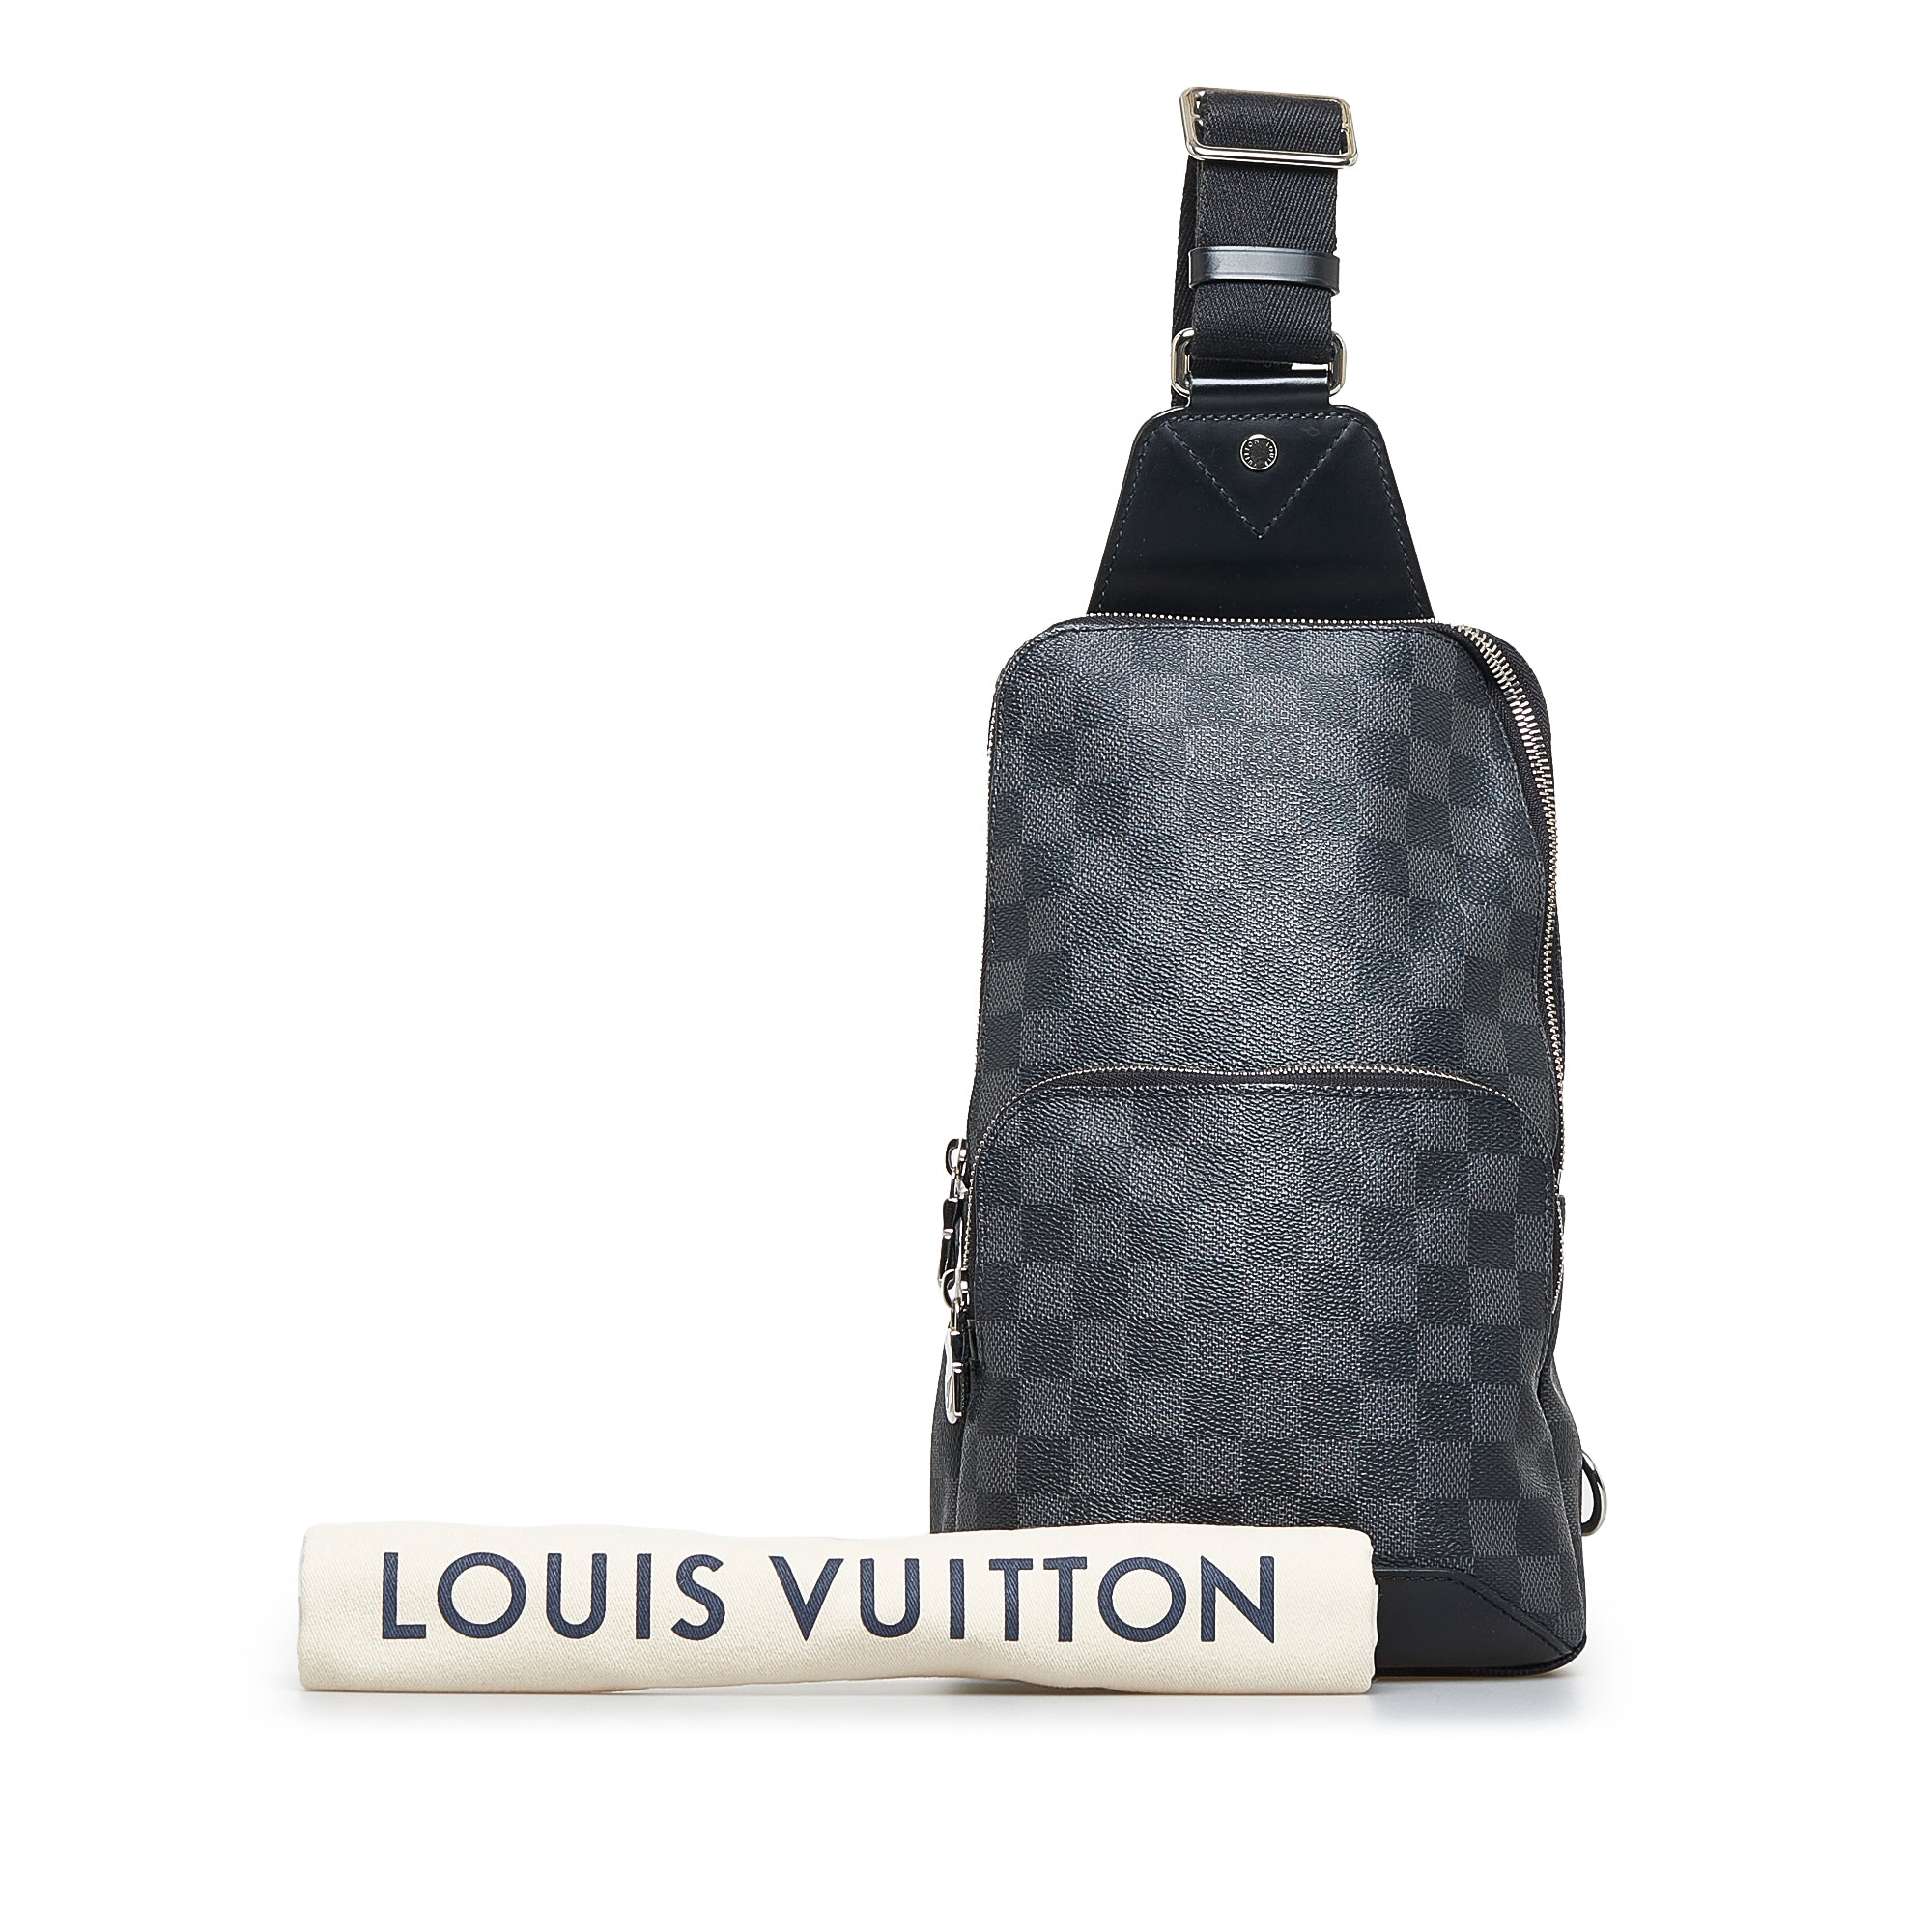 Louis Vuitton crossbody